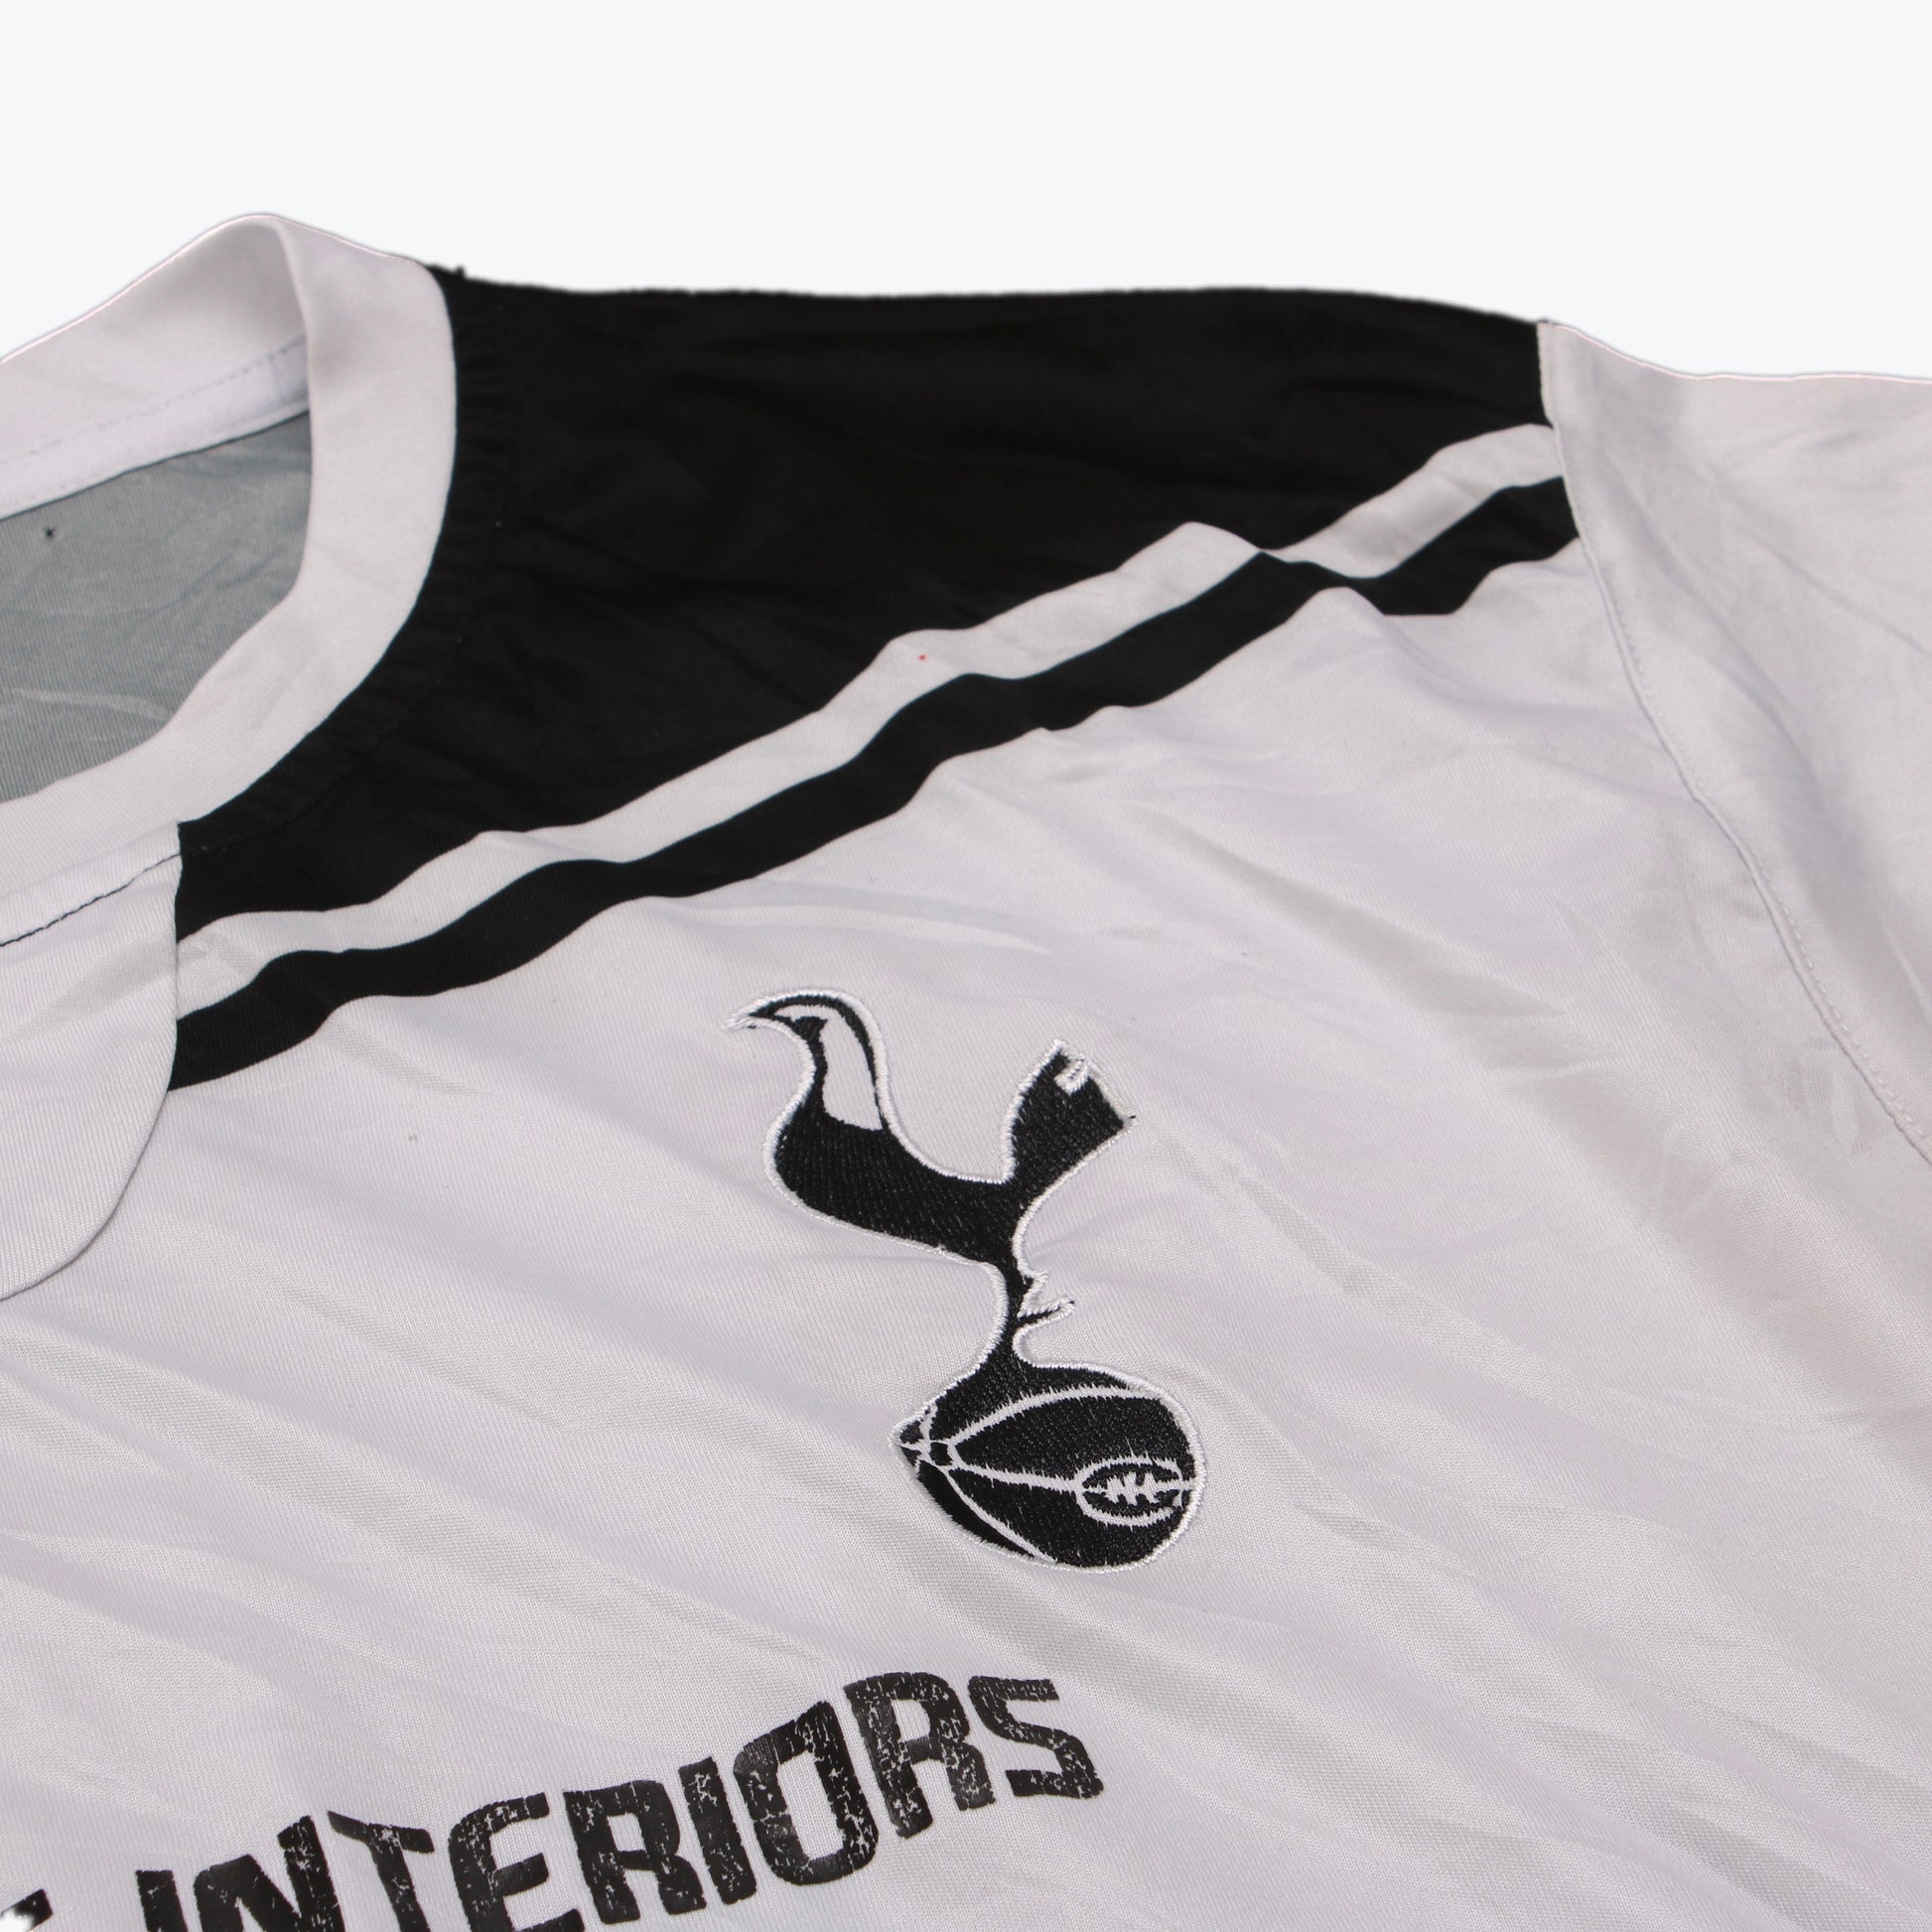 Spurs Football Shirt - American Madness